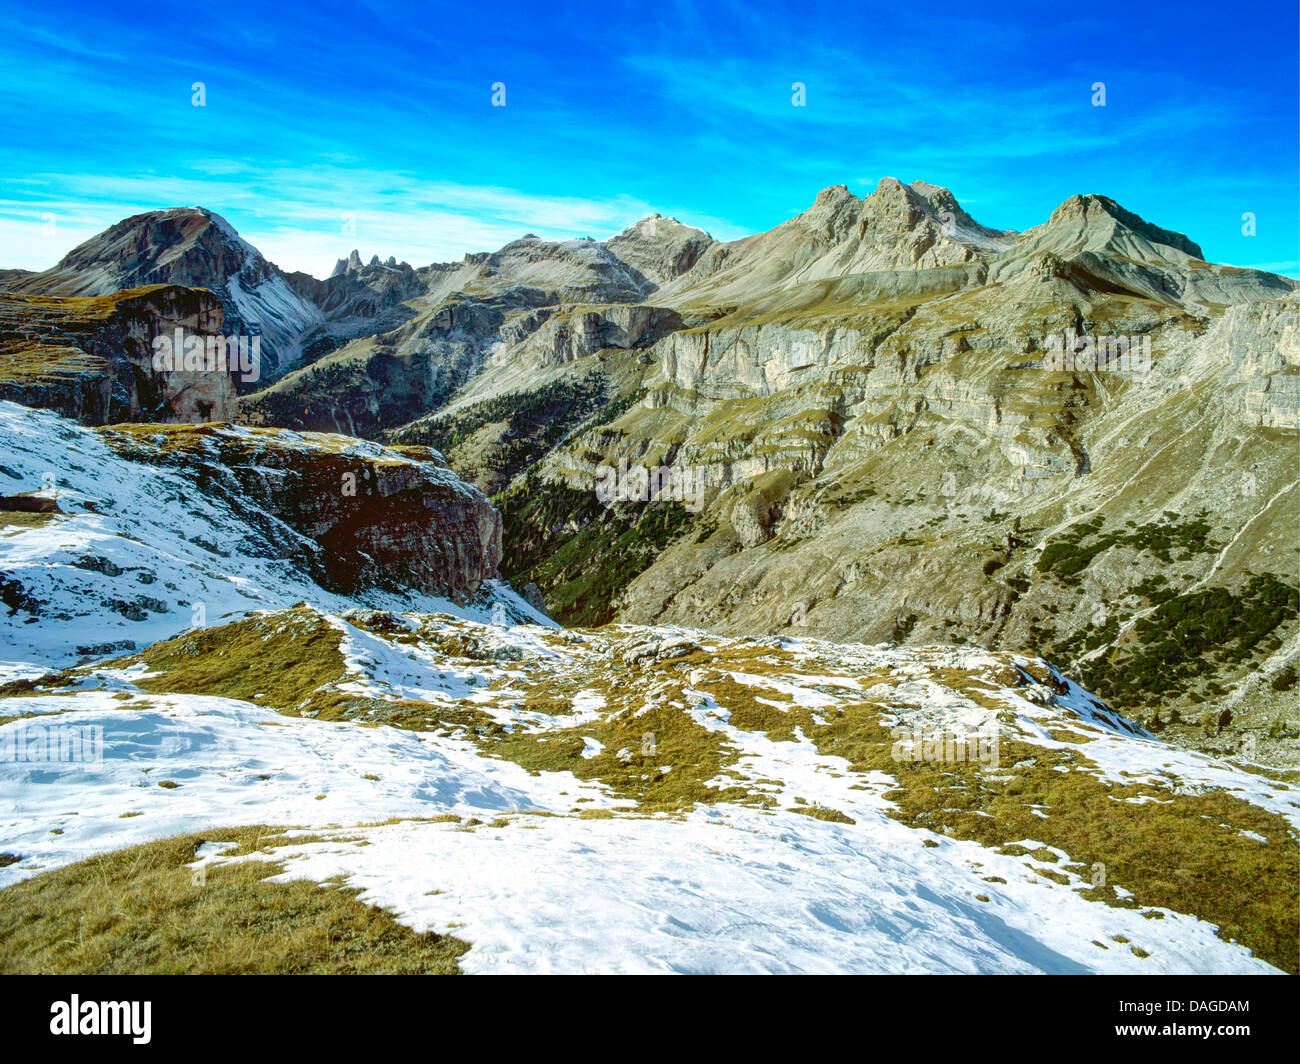 Geislergruppe in the nature park Puez-Geisler, Italy, South Tyrol, Dolomites Stock Photo